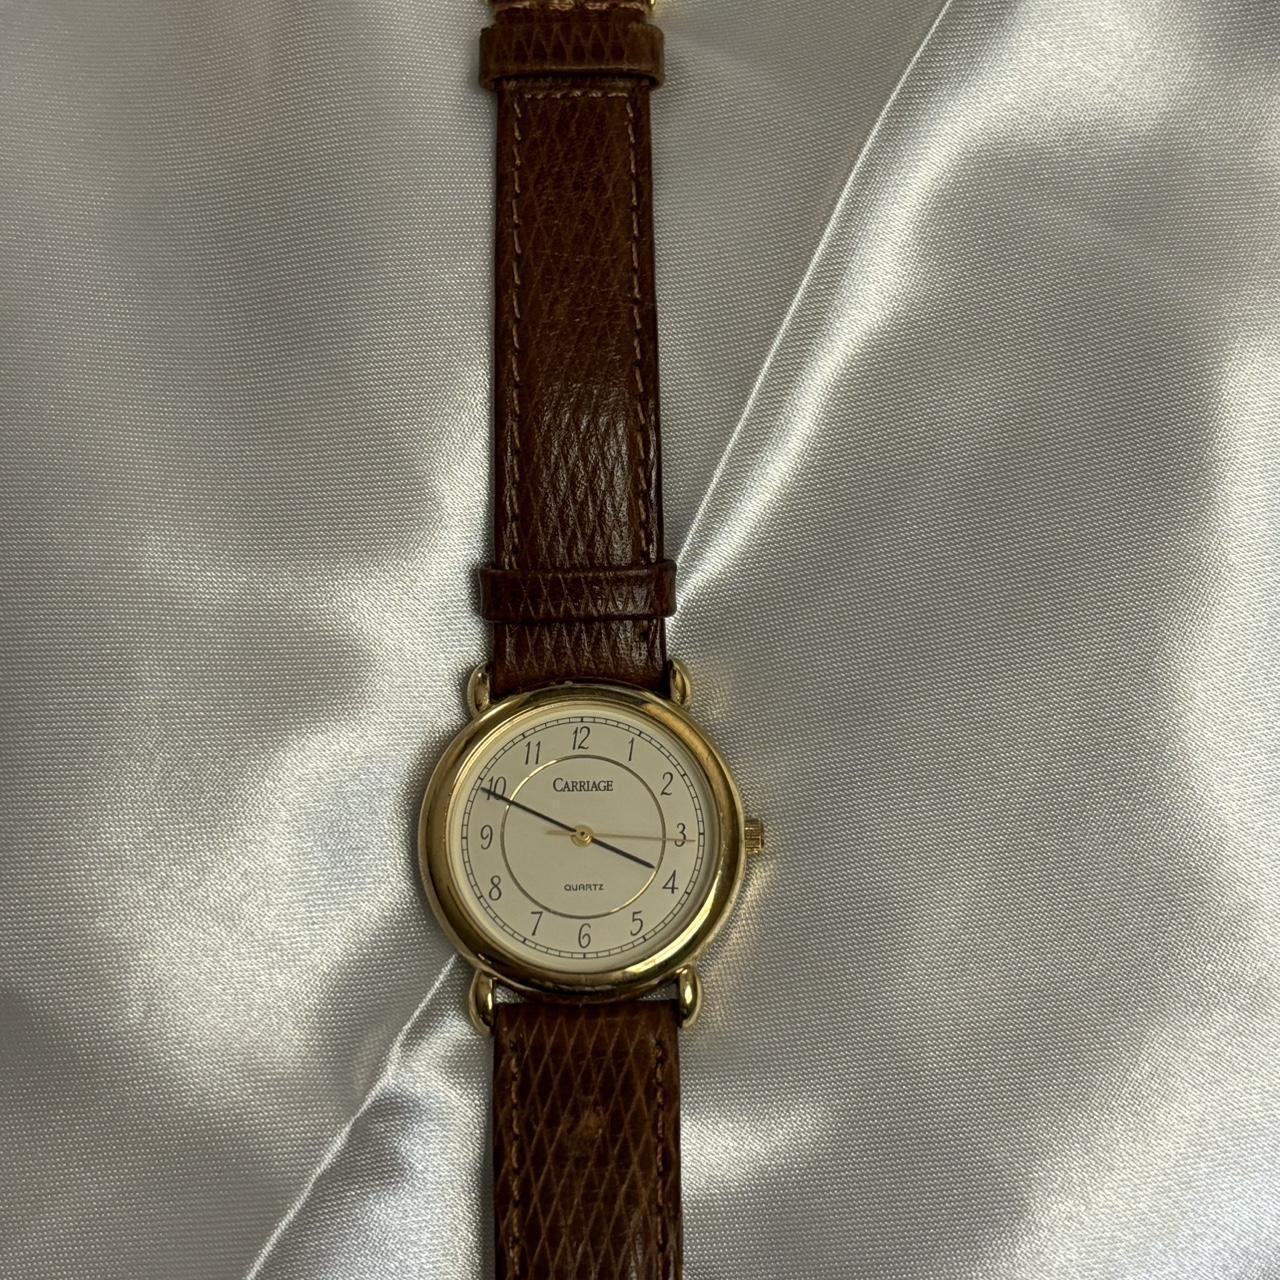 Adorable carriage vintage watch genuine leather... - Depop